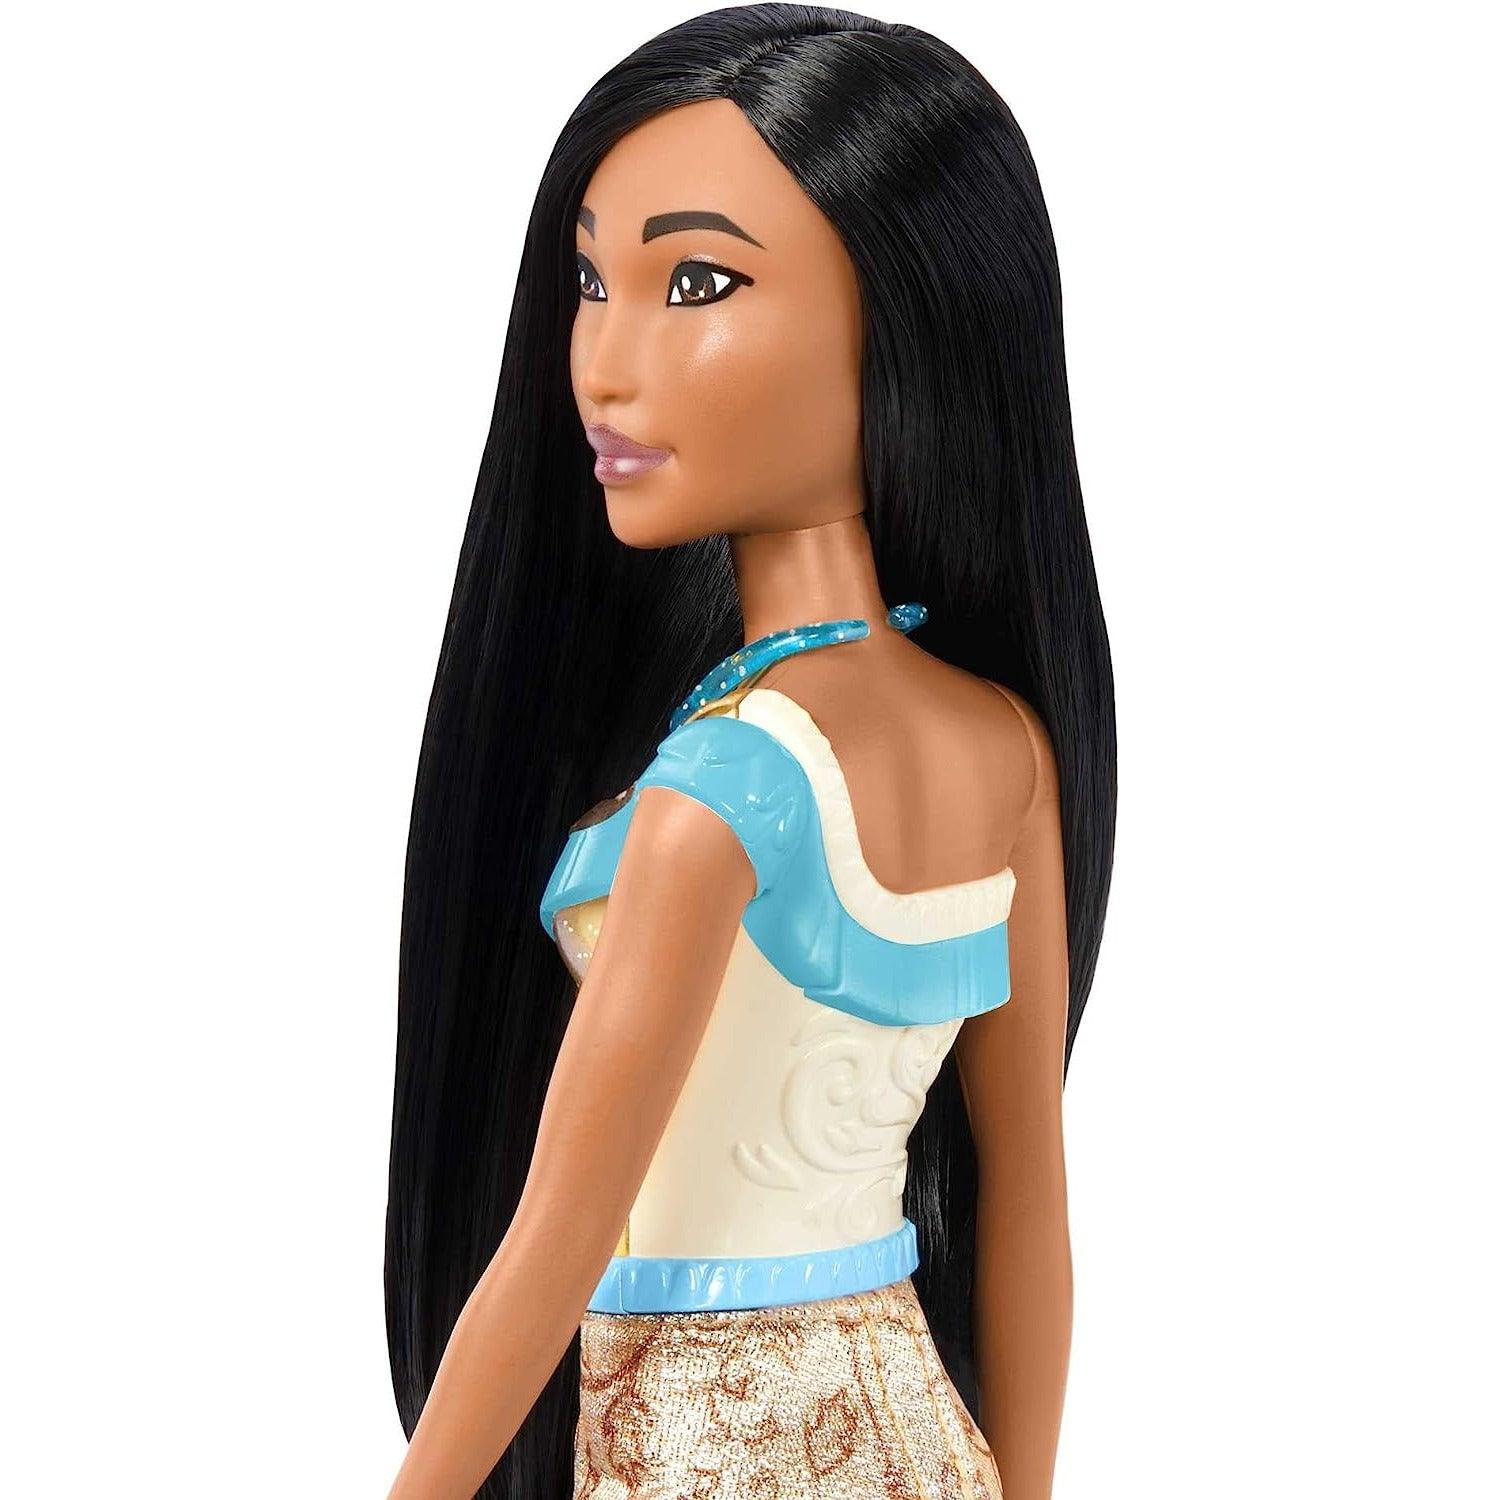 Mattel Disney Princess Pochontas Fashion Doll, Sparkling Look with Black Hair, Brown Eyes & Necklace Accessory - BumbleToys - 5-7 Years, Boys, Disney Princess, Fashion Dolls & Accessories, Girls, Mattel, Pre-Order